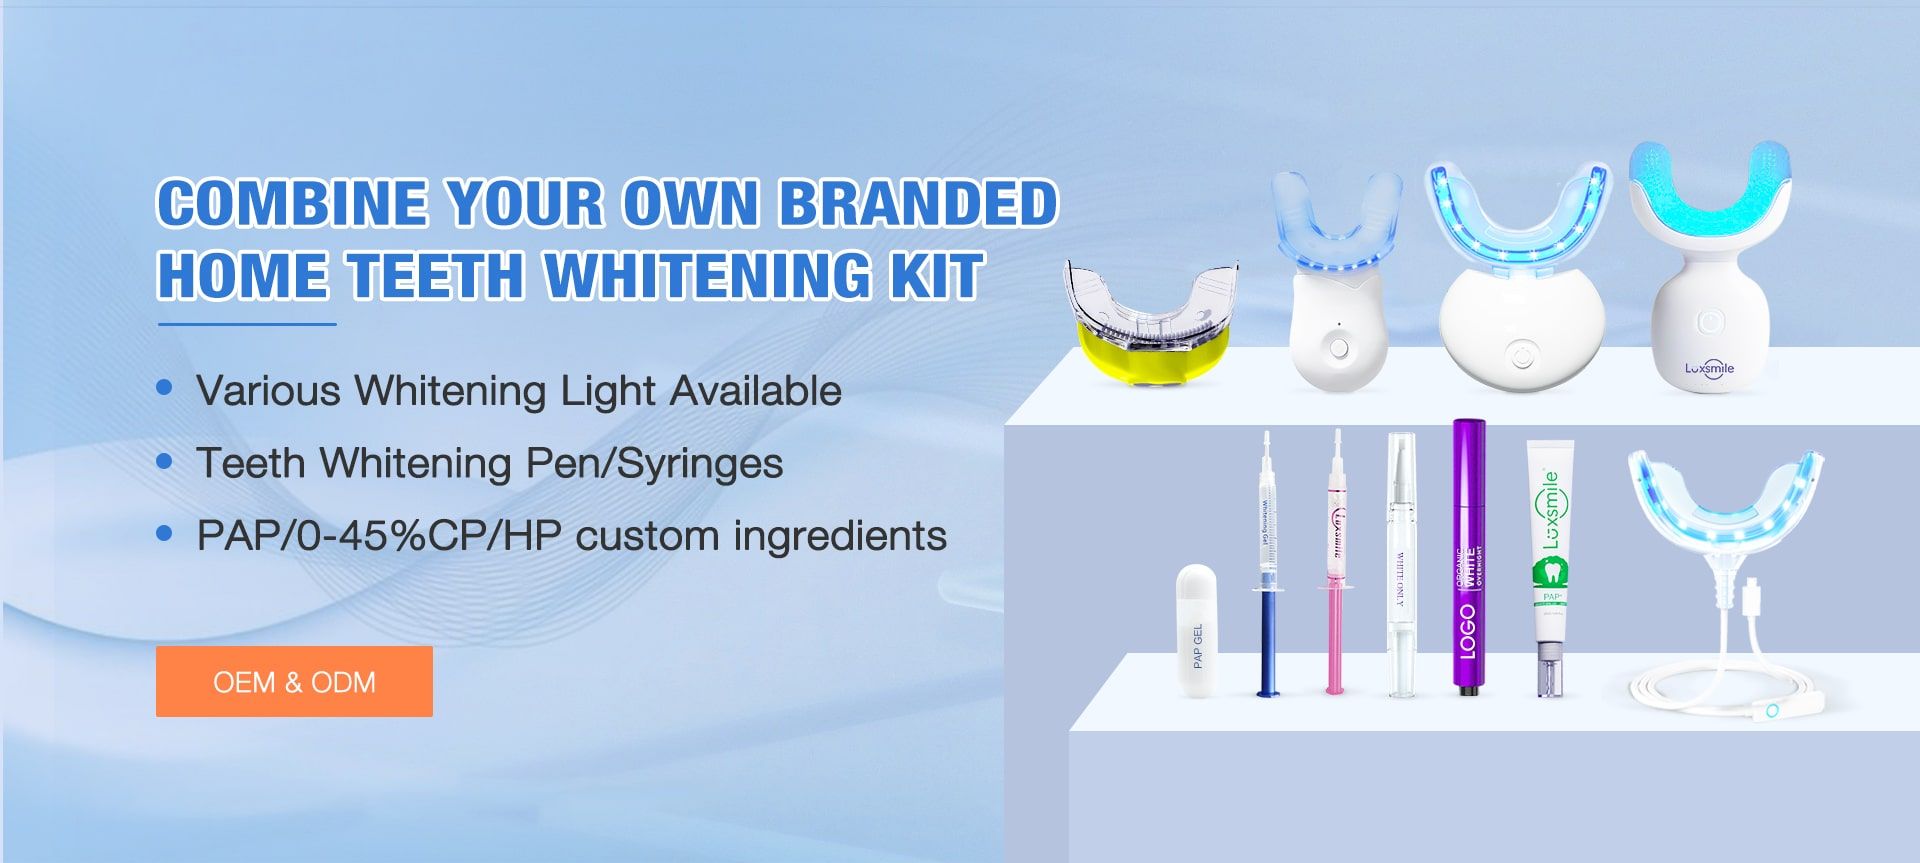 Custom teeth whitening home kit, Private label teeth whitening home kit